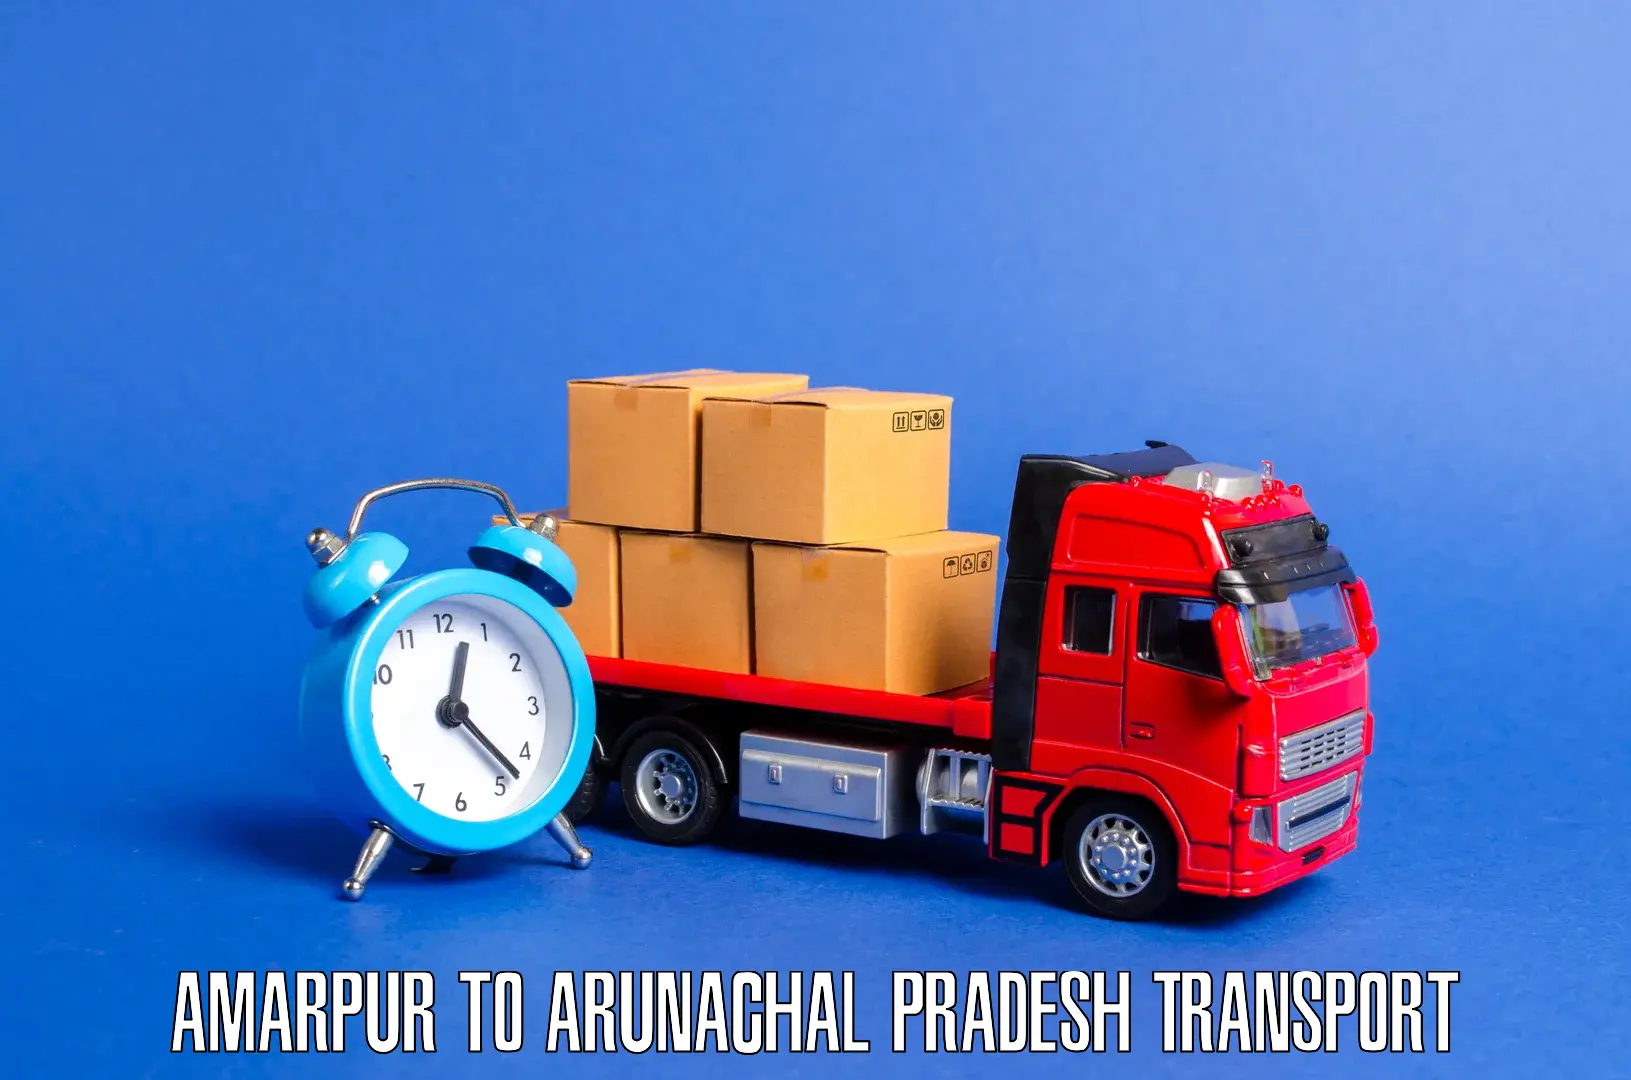 Pick up transport service Amarpur to Changlang